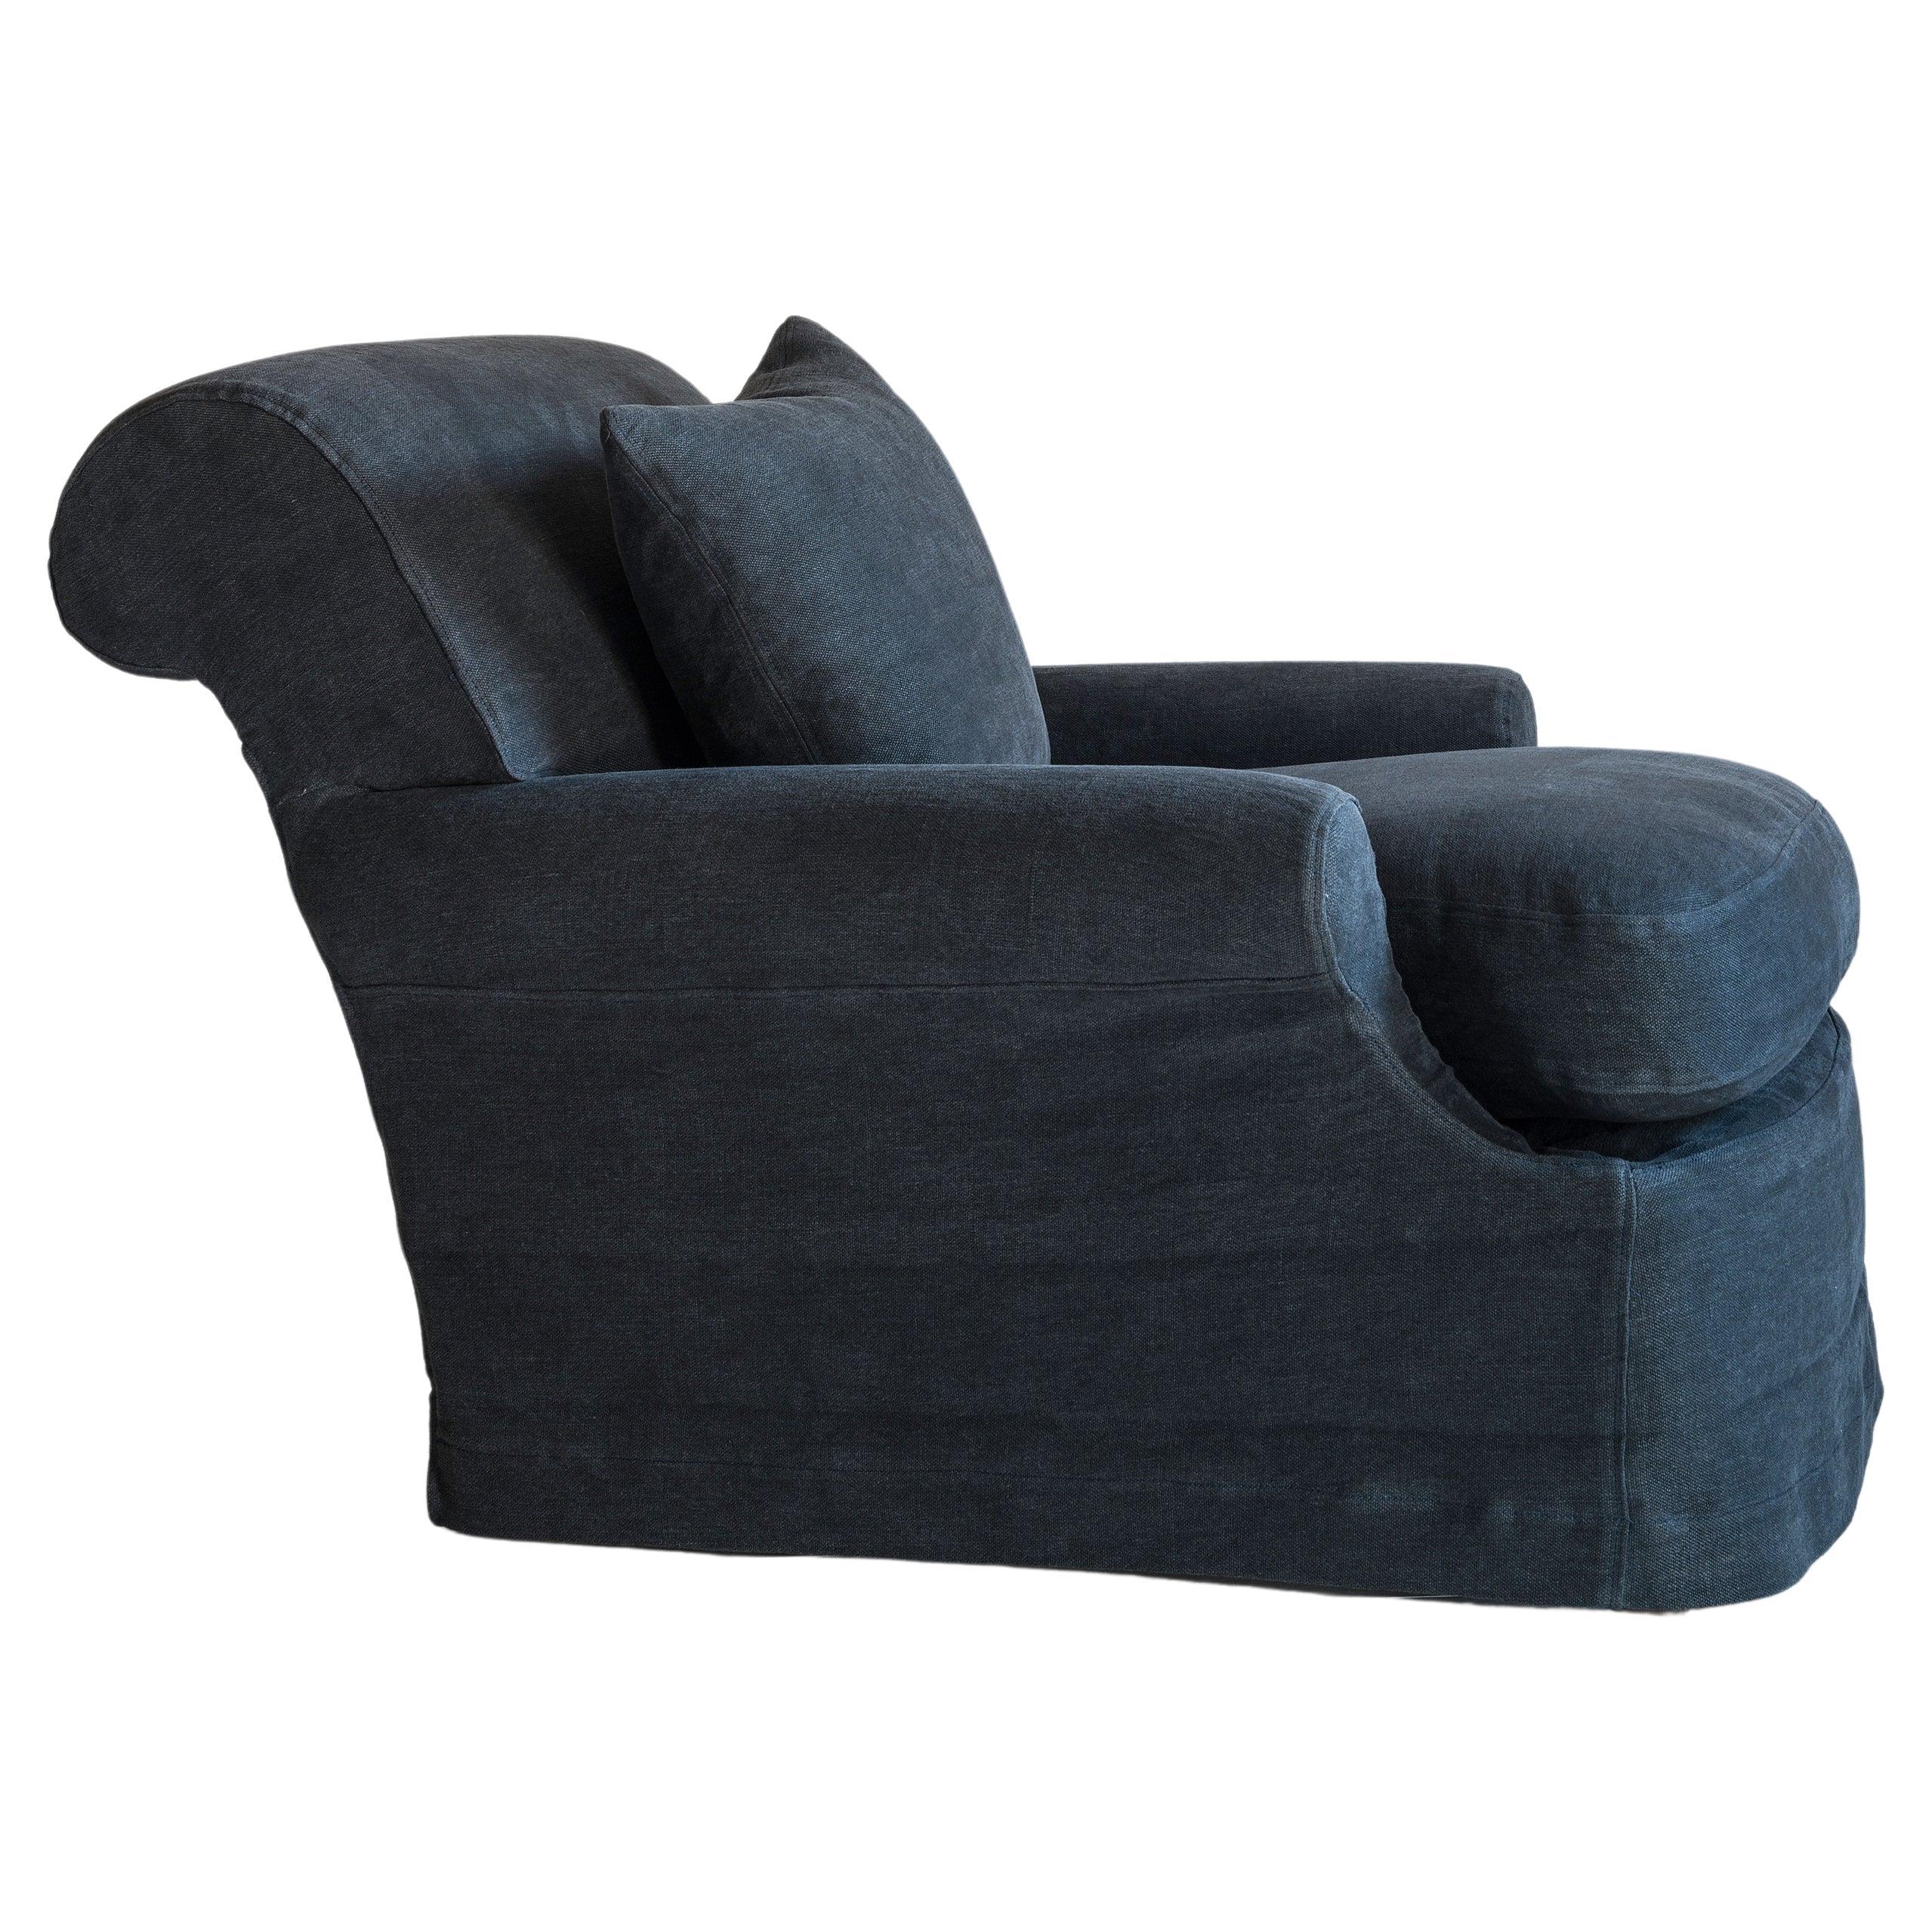 The Albert, fauteuil en lin belge fabriqué sur mesure en vente